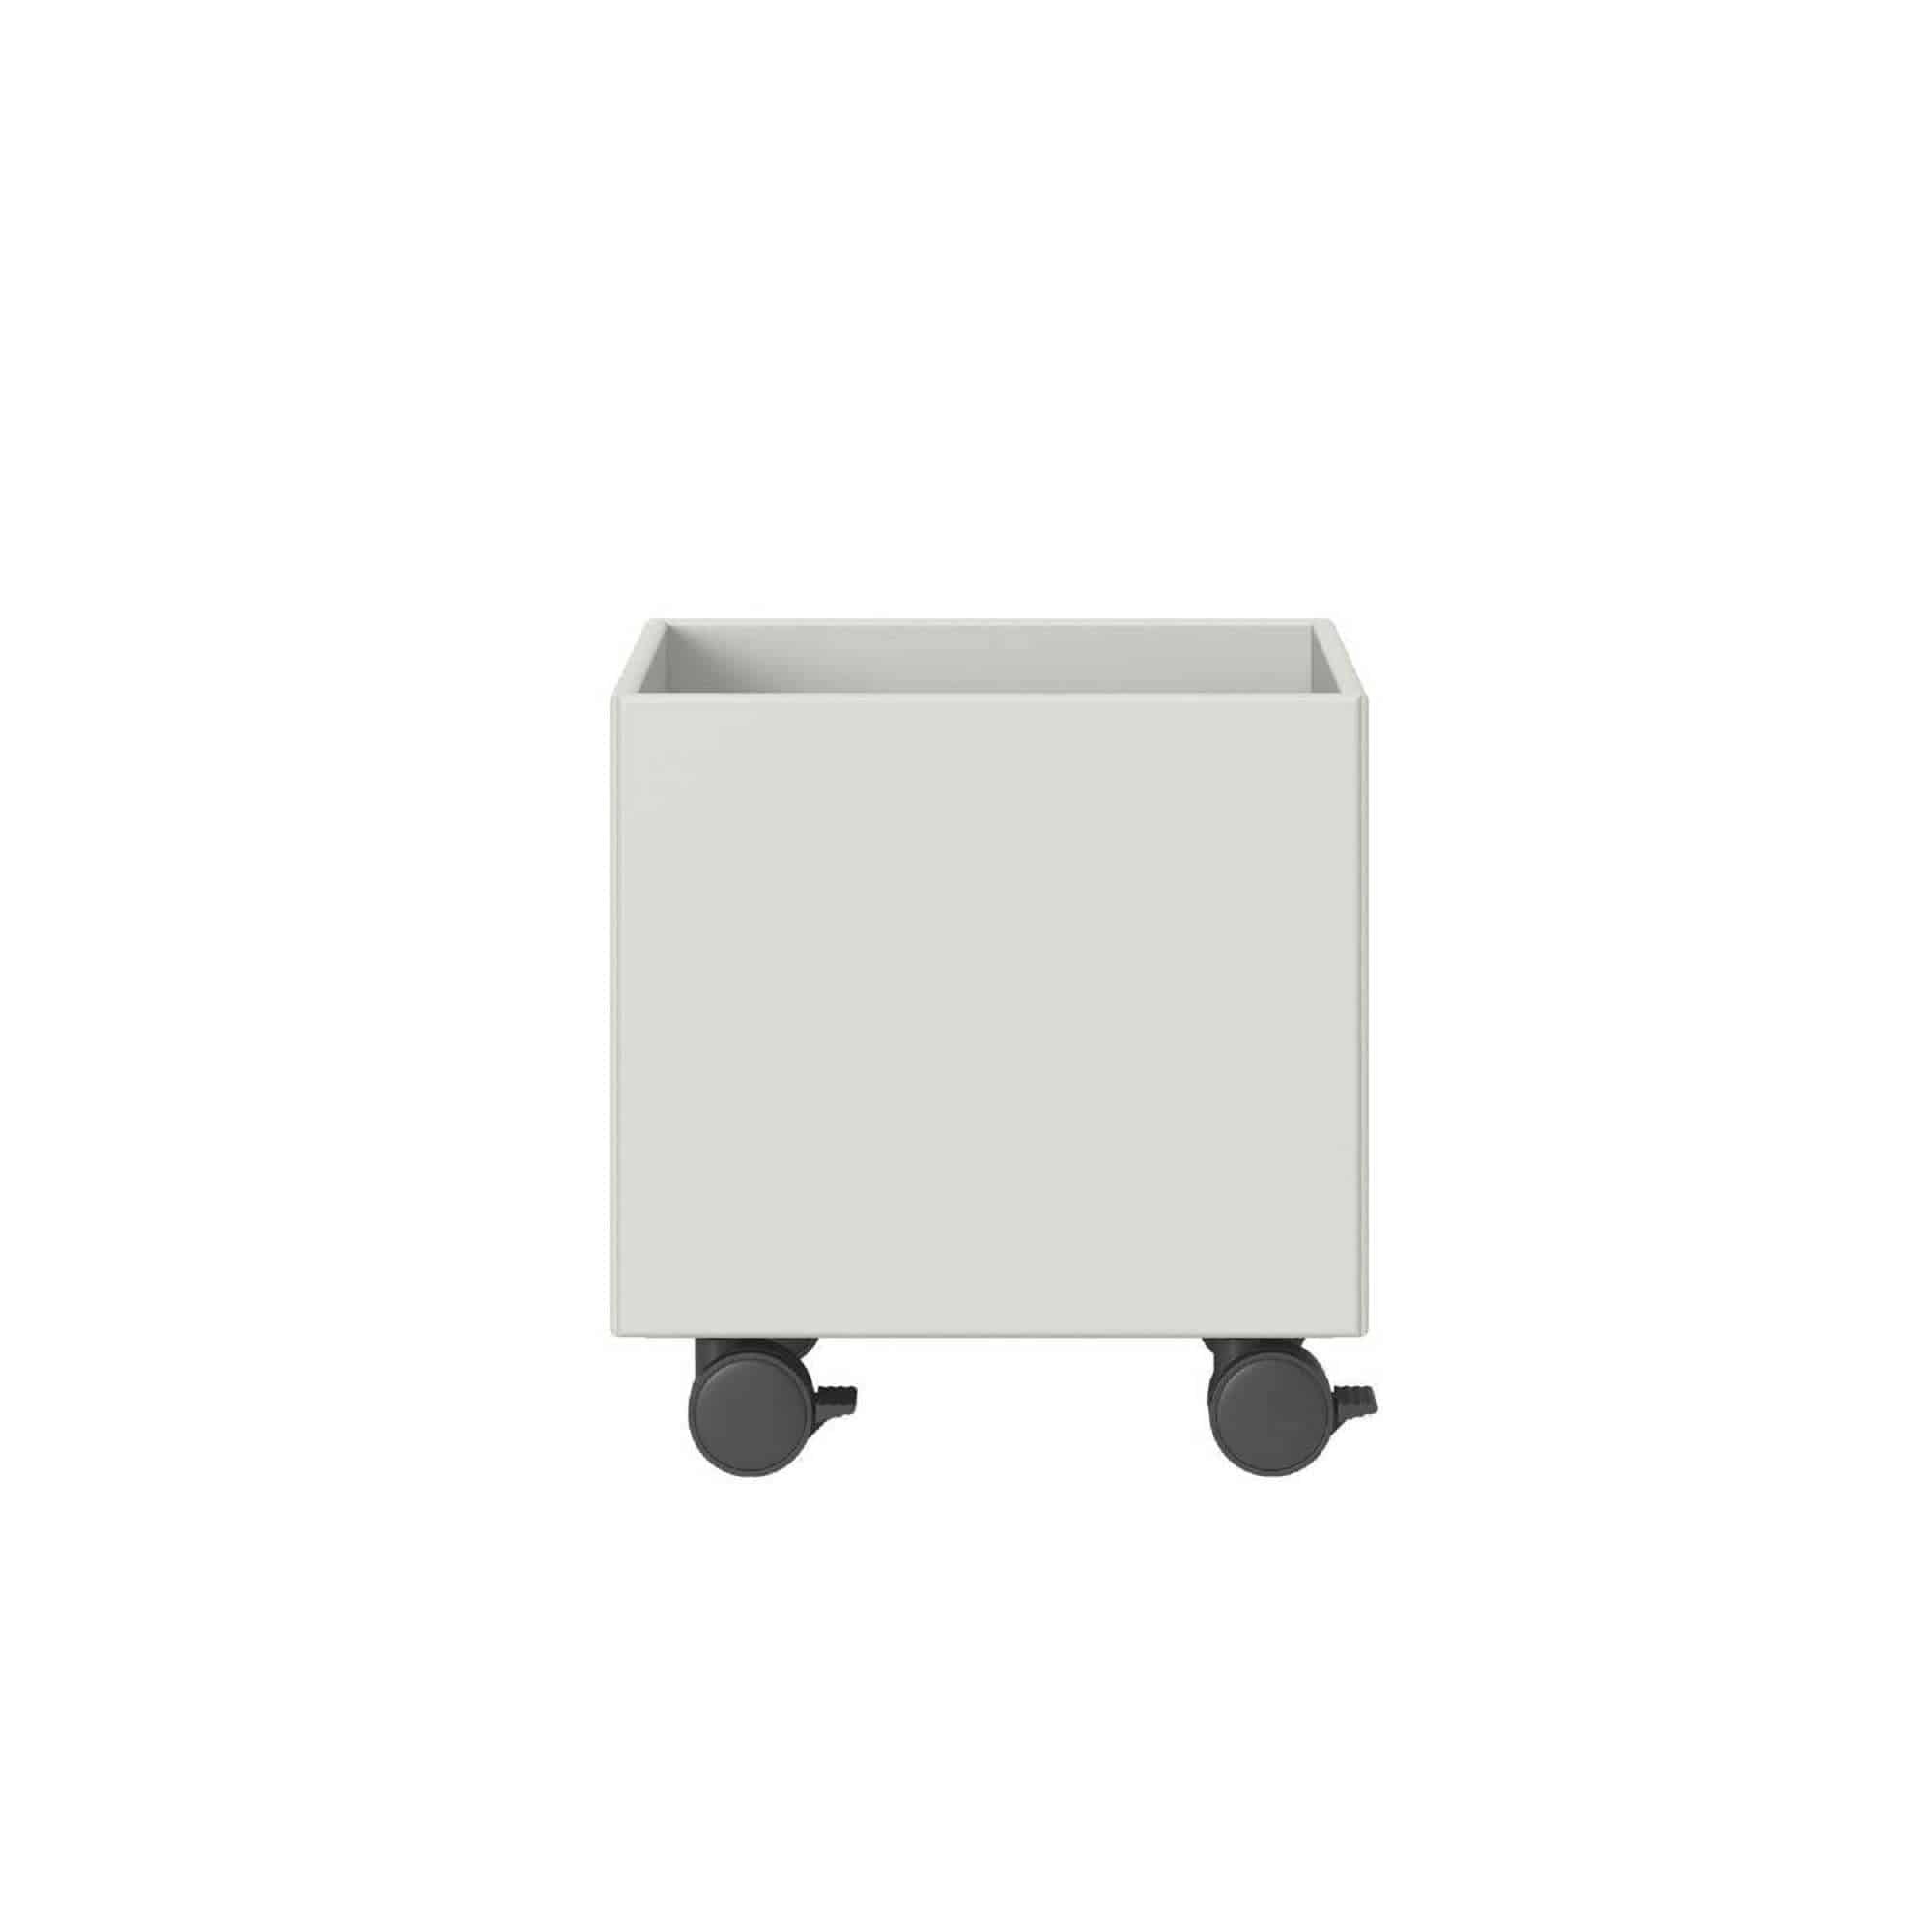 Montana Mini Play box MP1001 – Storage box on castors